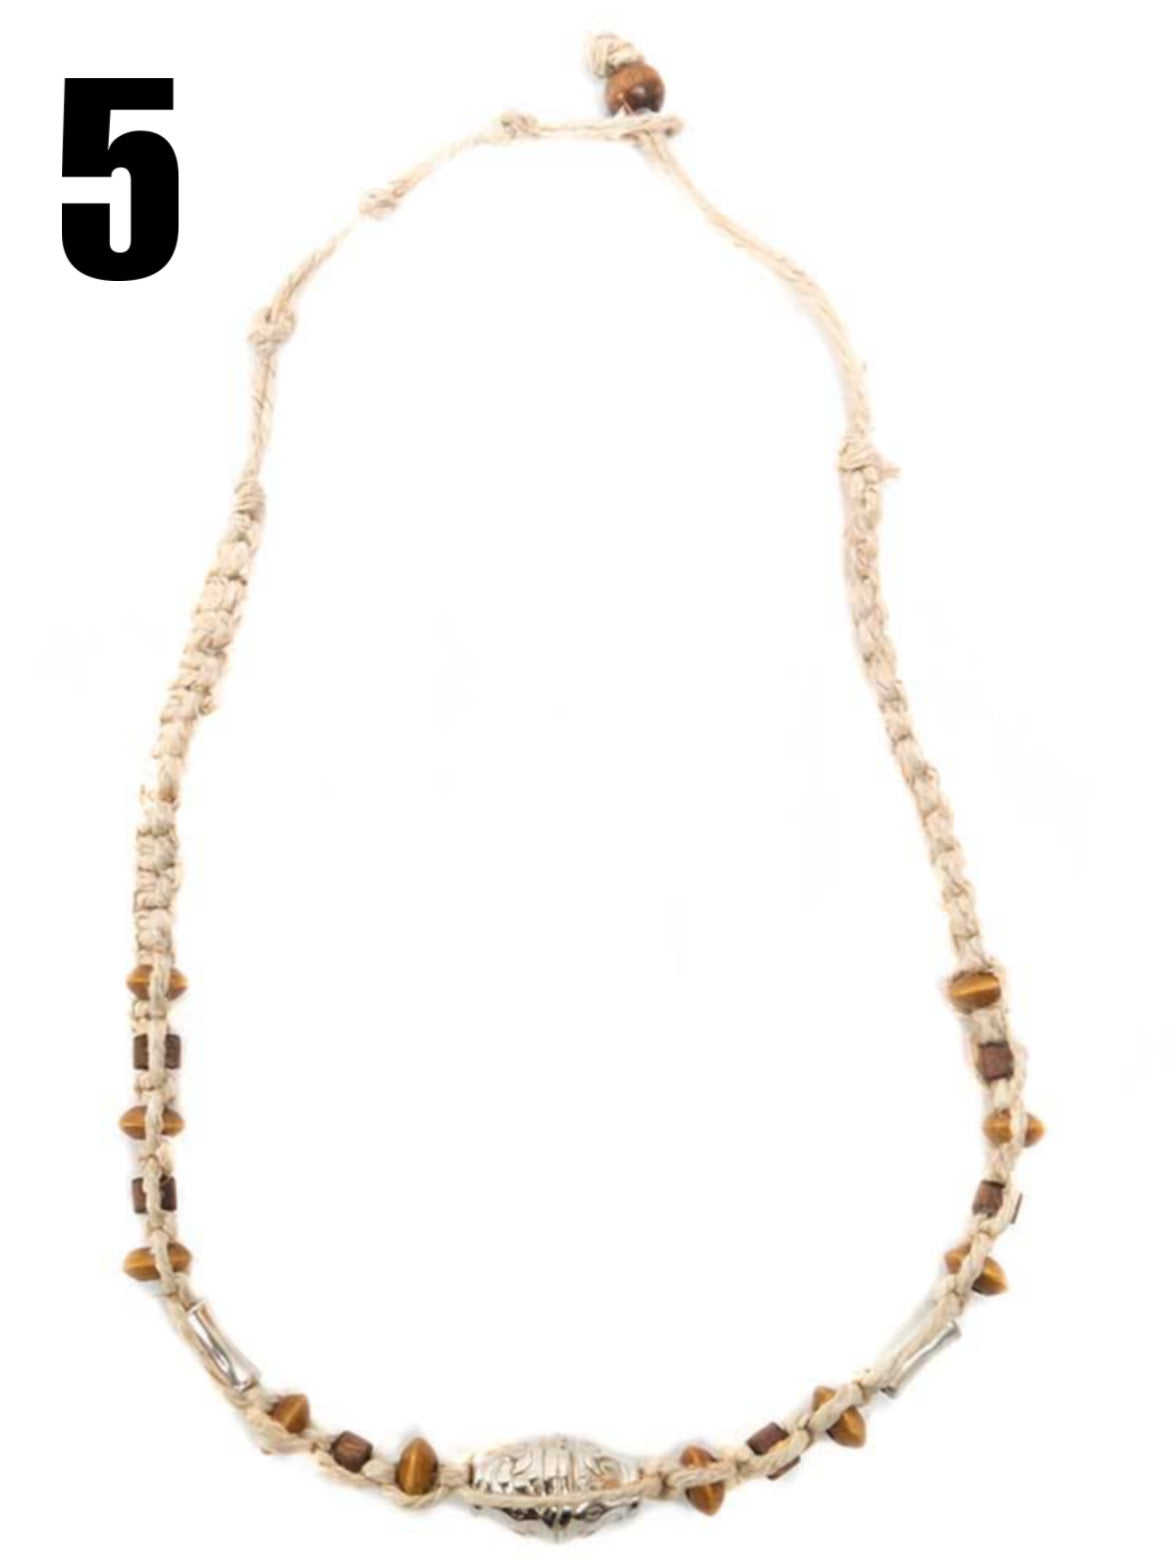 Hemp Necklace With Metal Beads